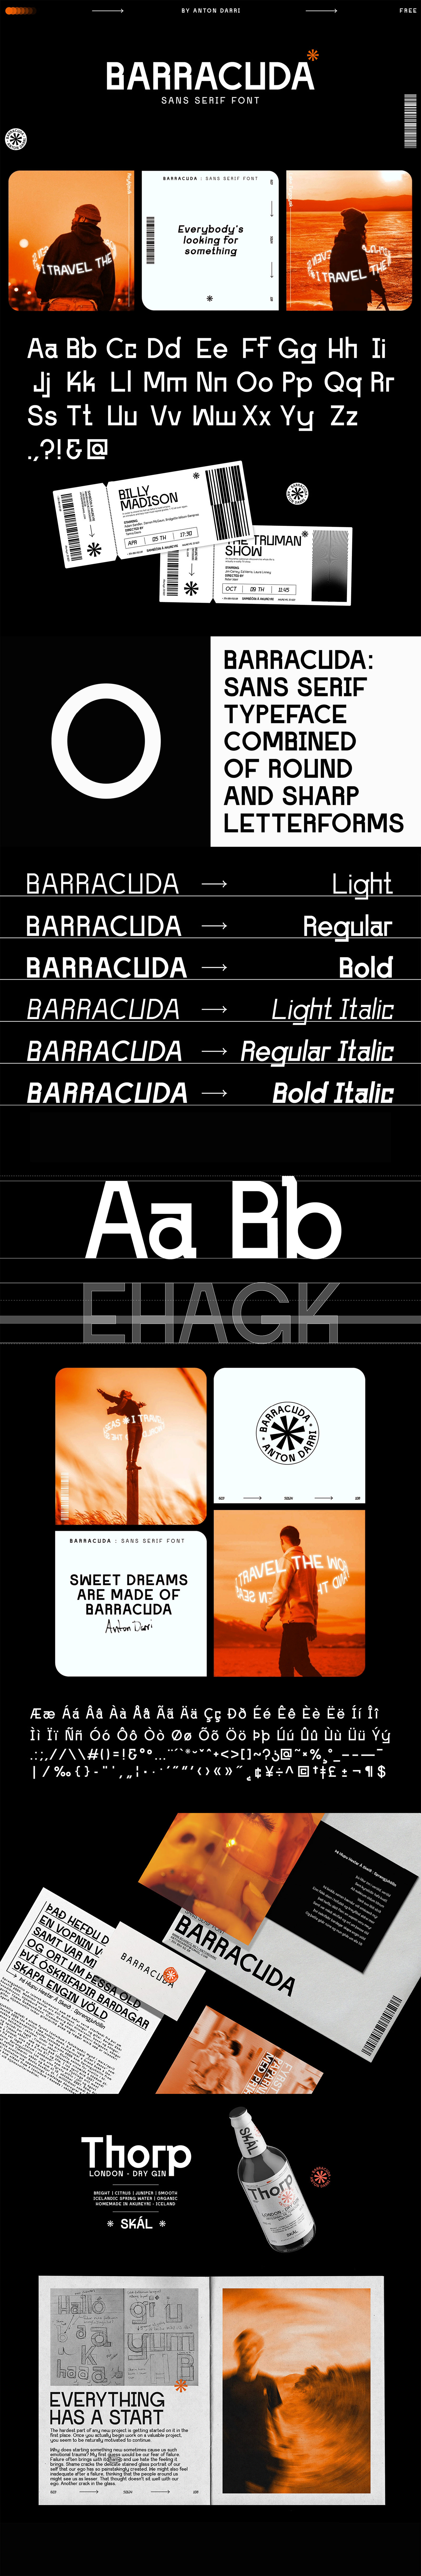 Barracuda Free Typeface